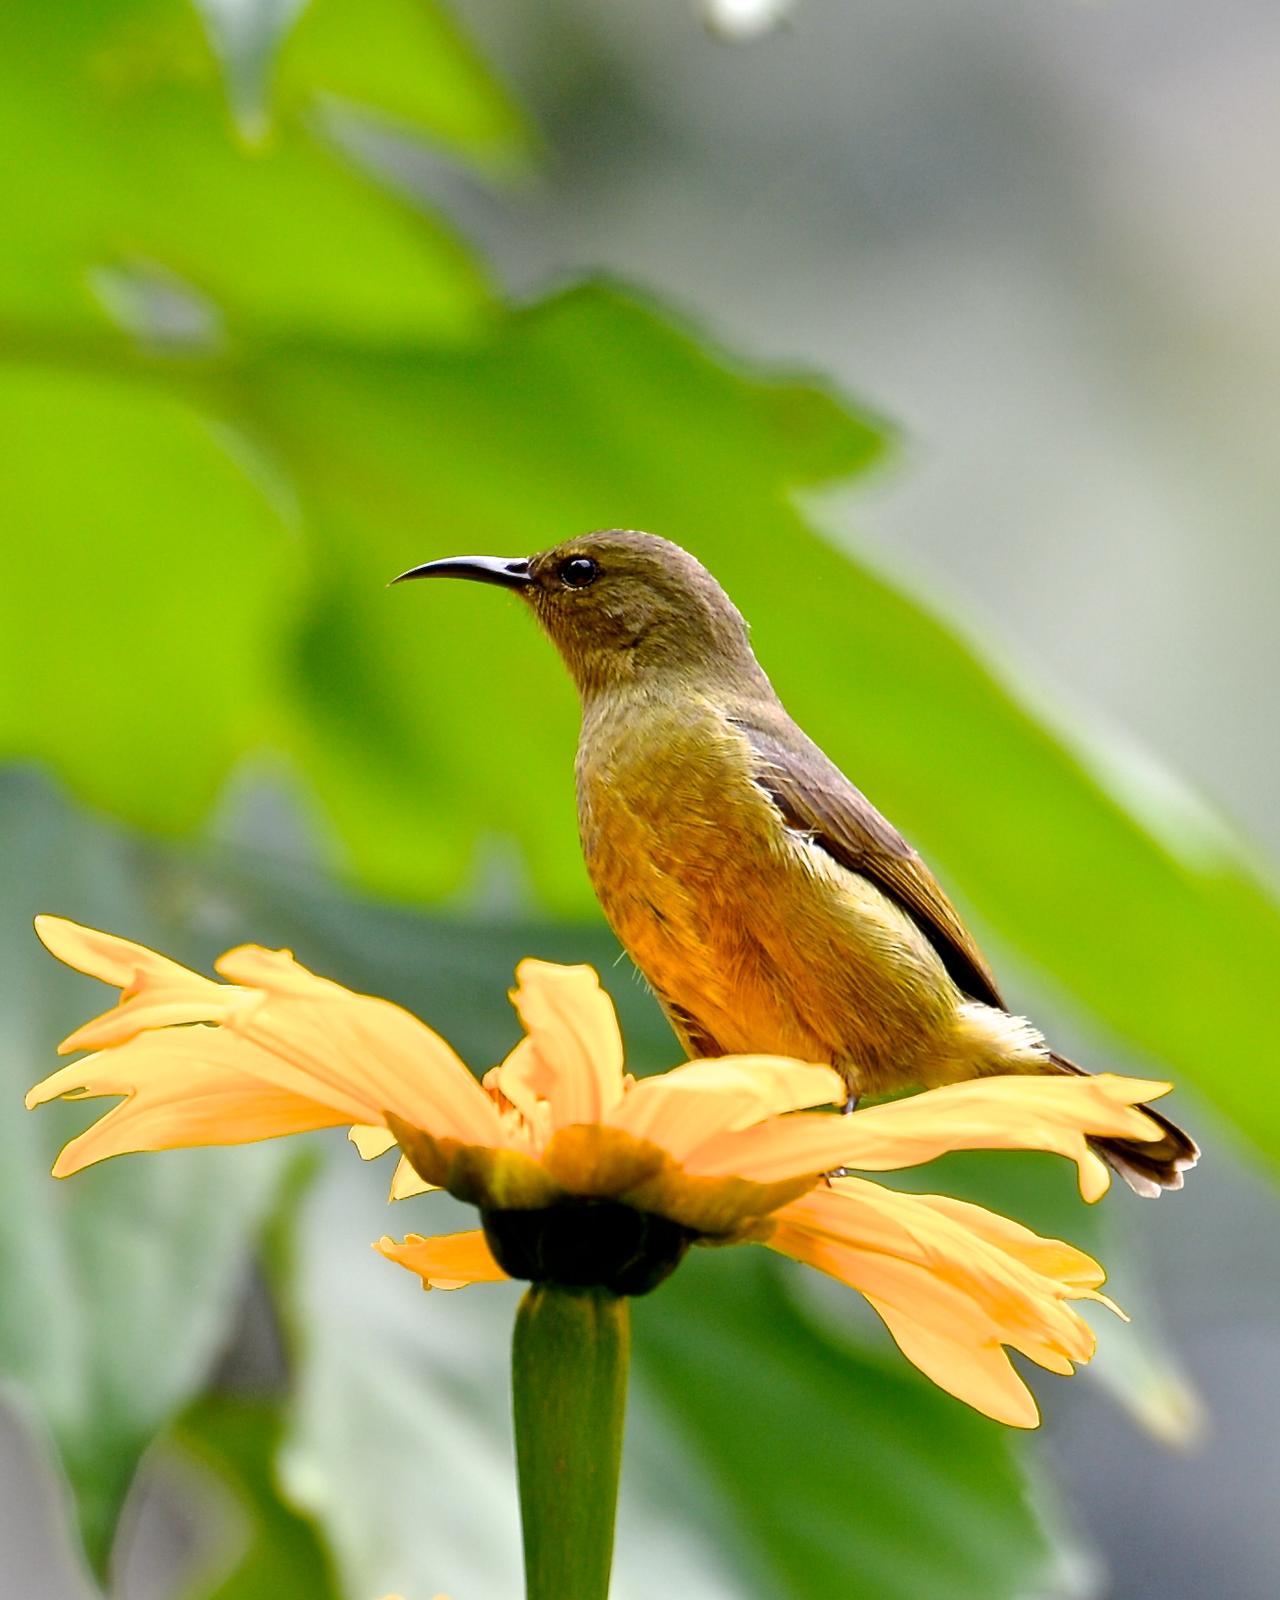 Stuhlmann's Sunbird Photo by Gerald Friesen